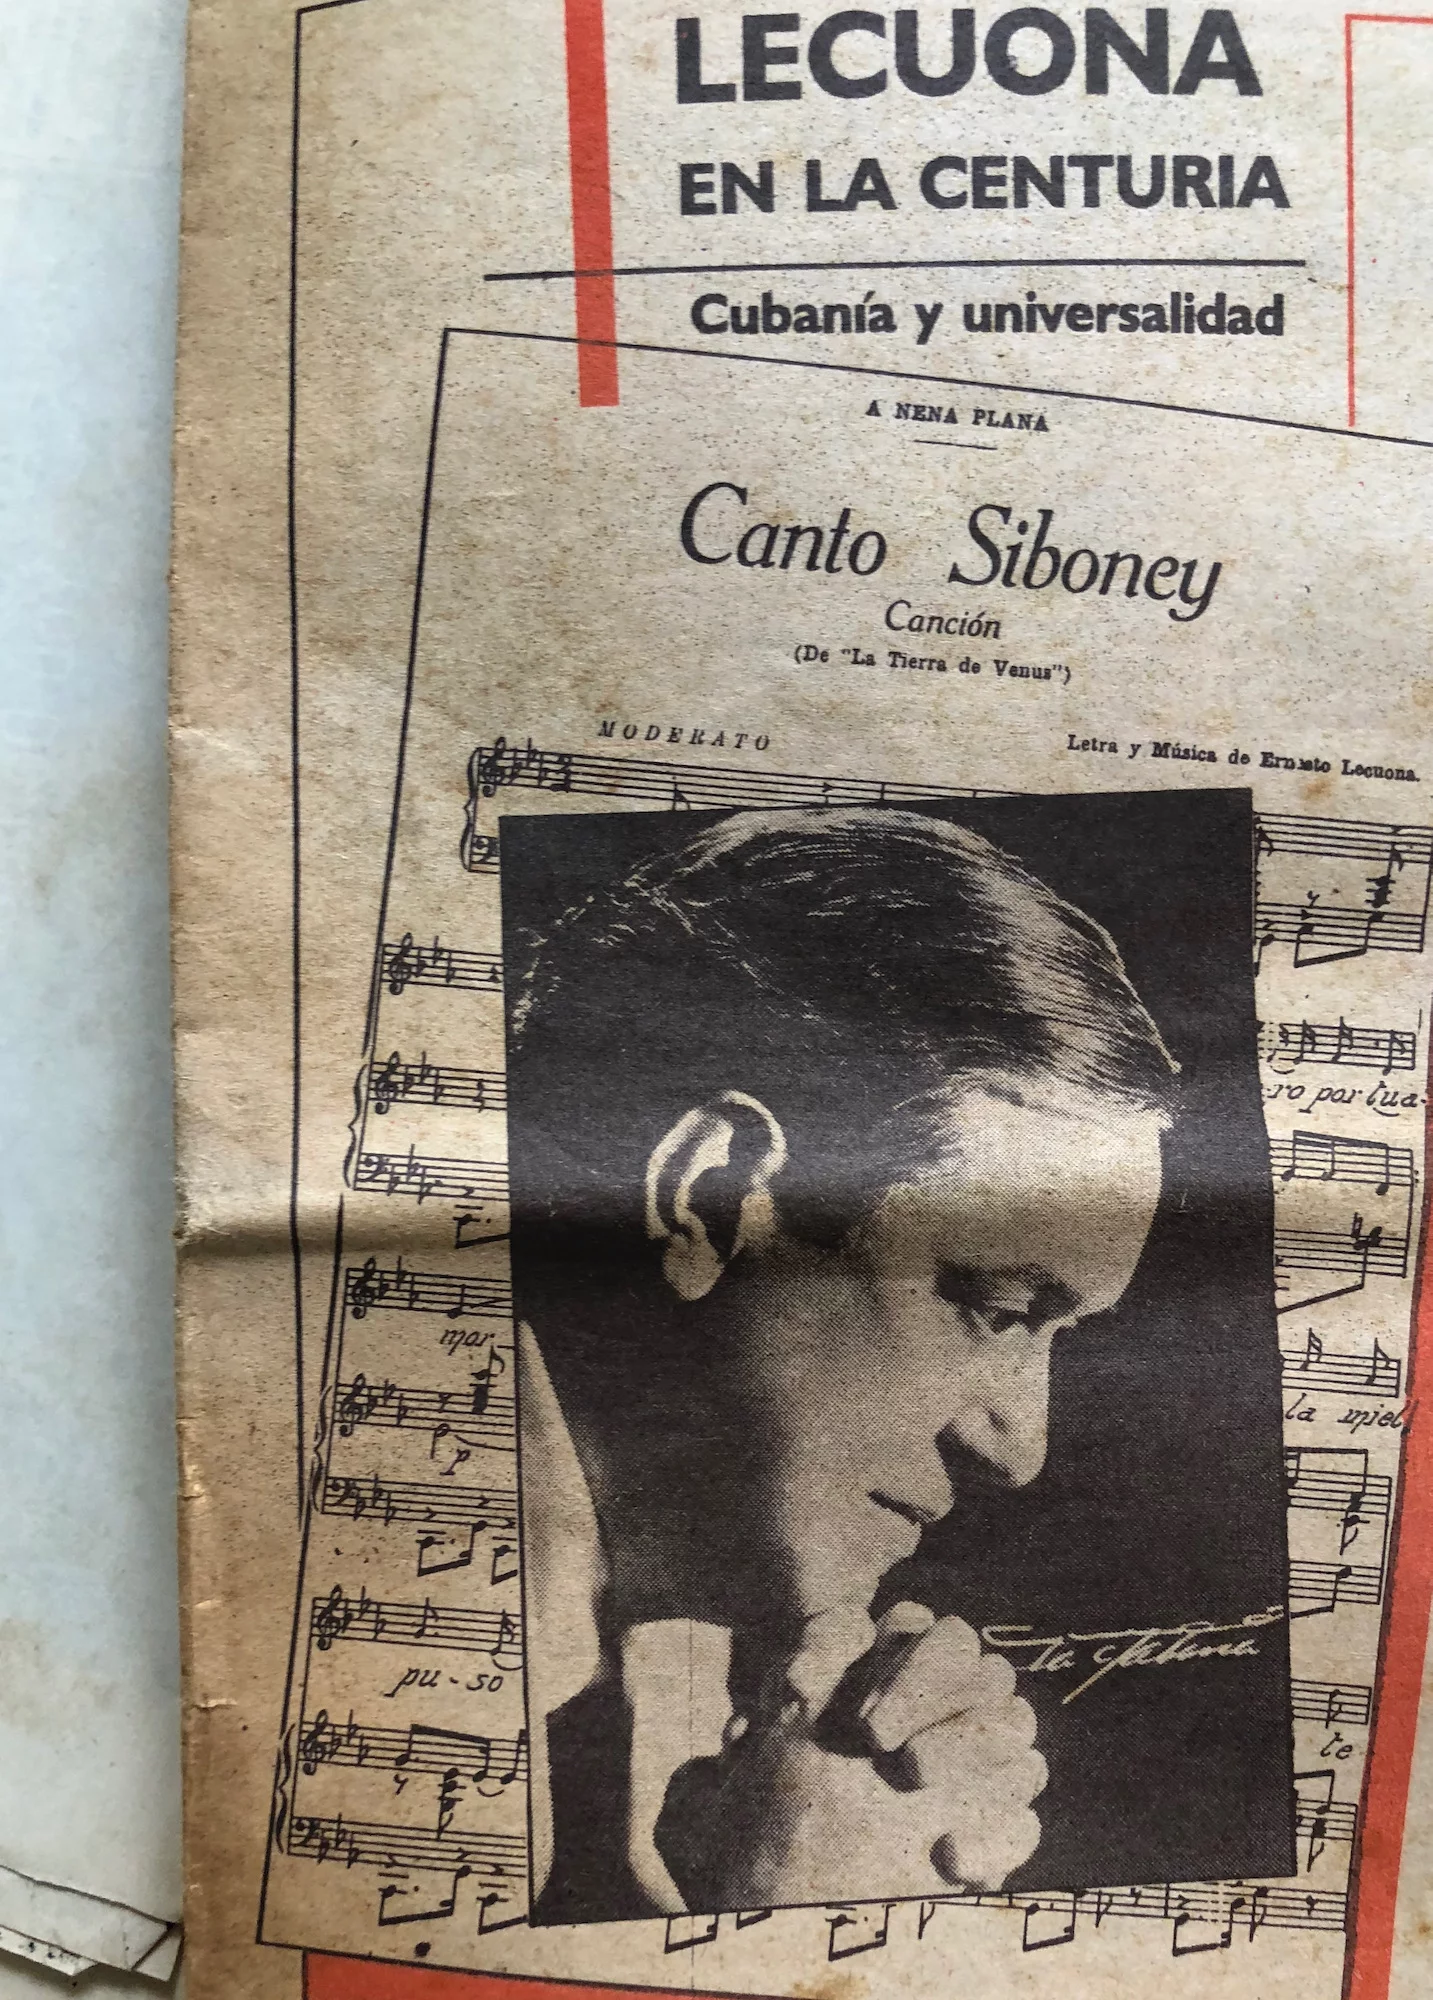 Siboney - Written by Ernesto Lecuona